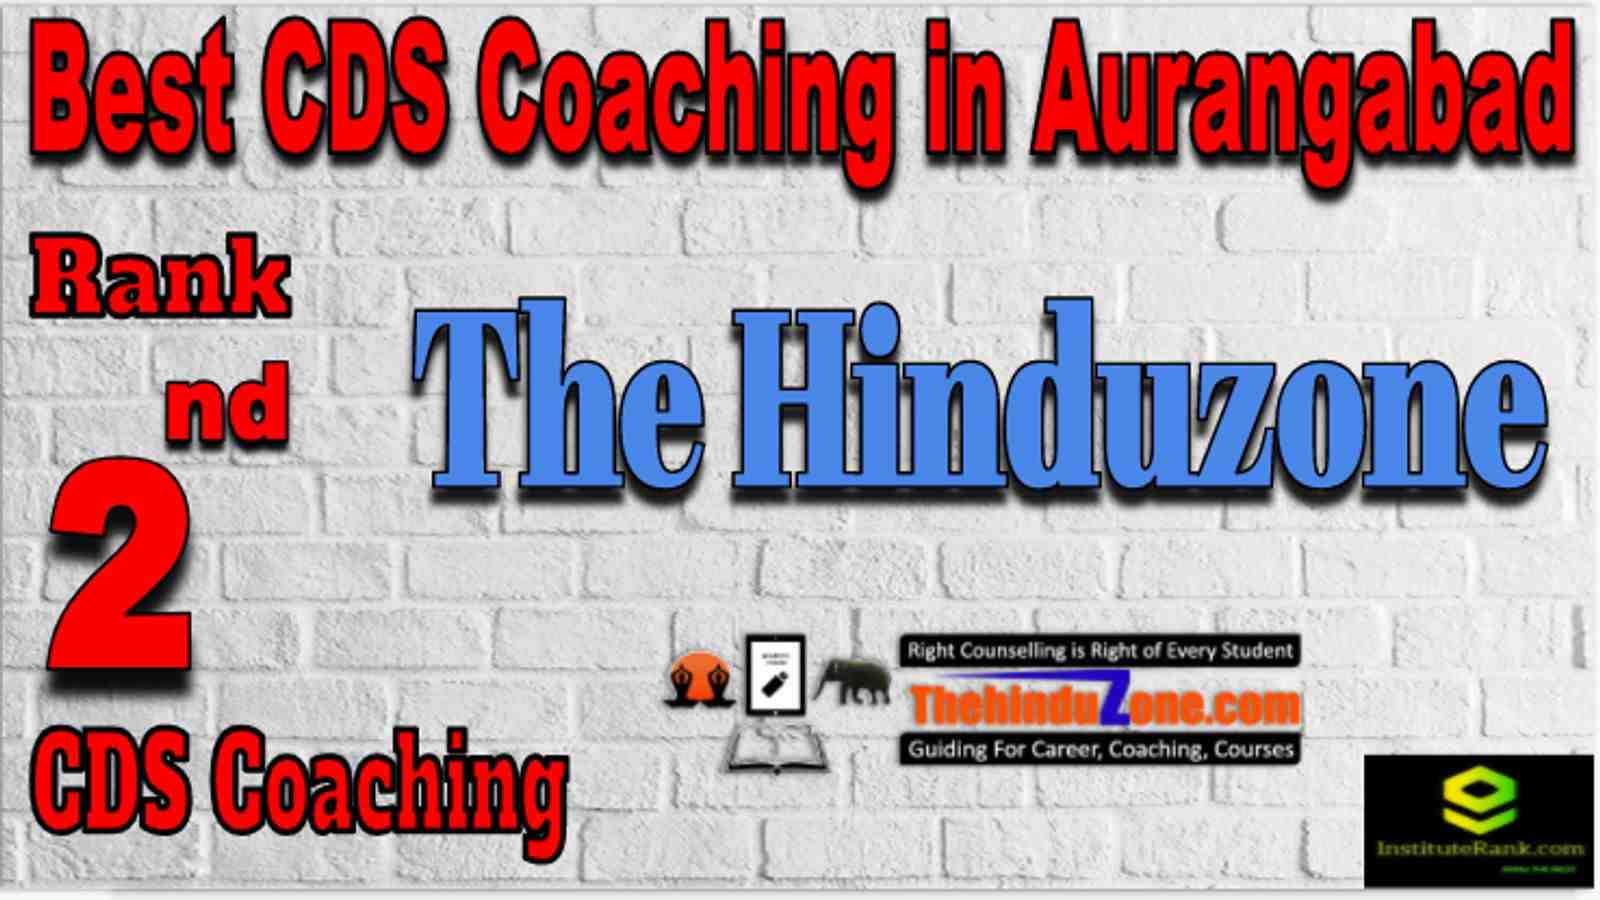 Rank 2 Best CDS Coaching in AurangabadRank 2 Best CDS Coaching in Aurangabad